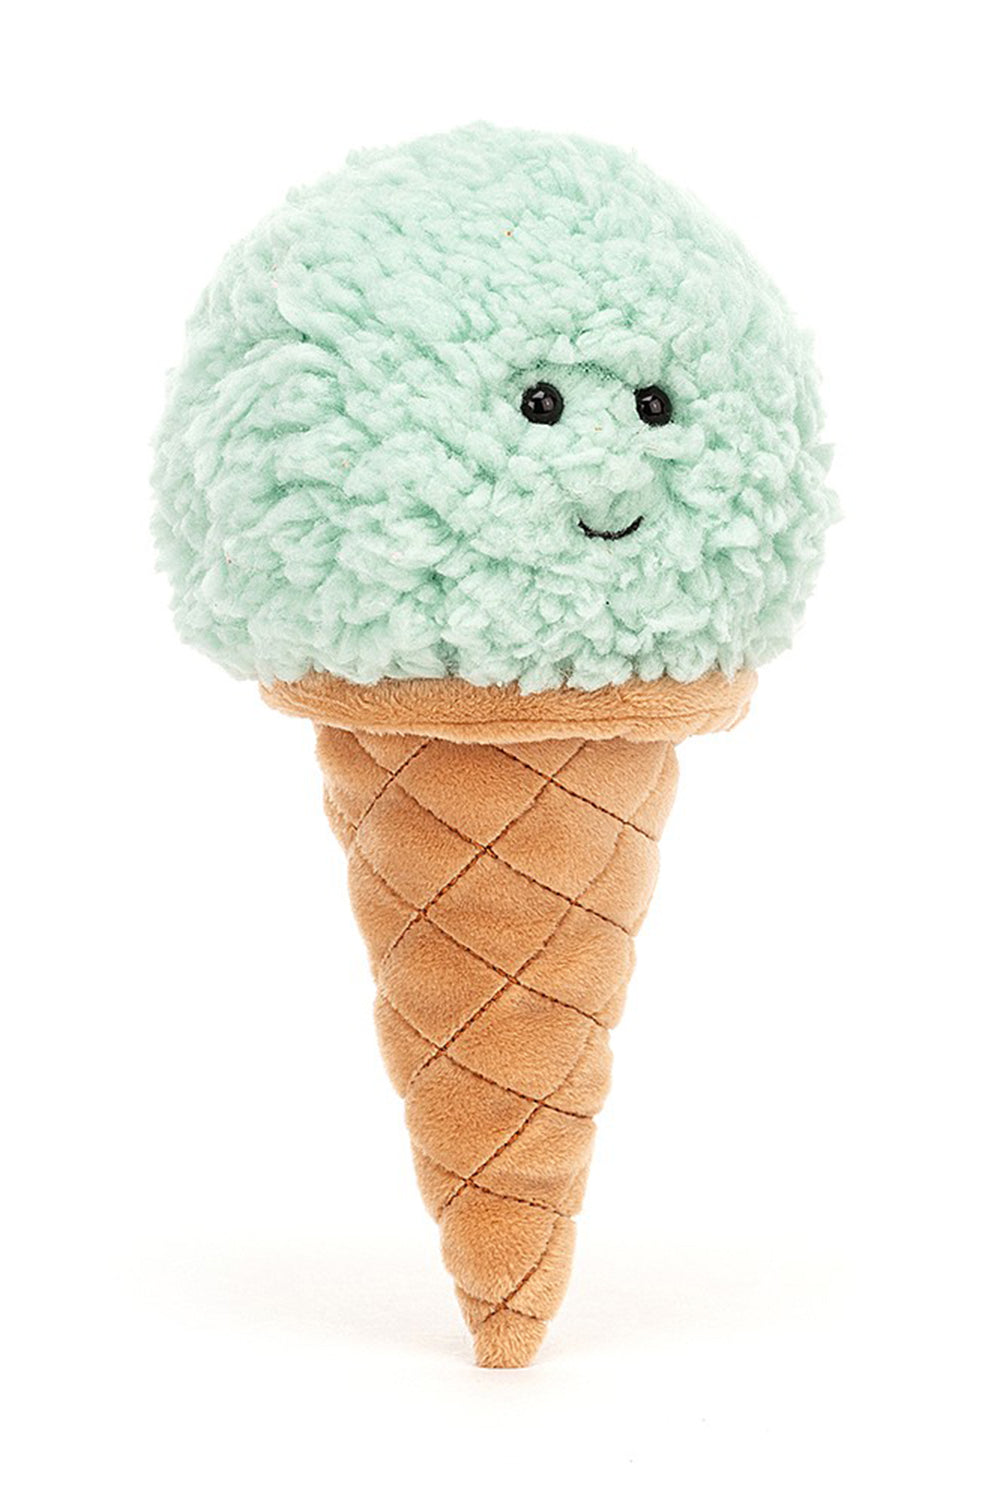 JELLYCAT Irresistible Ice Cream - Mint